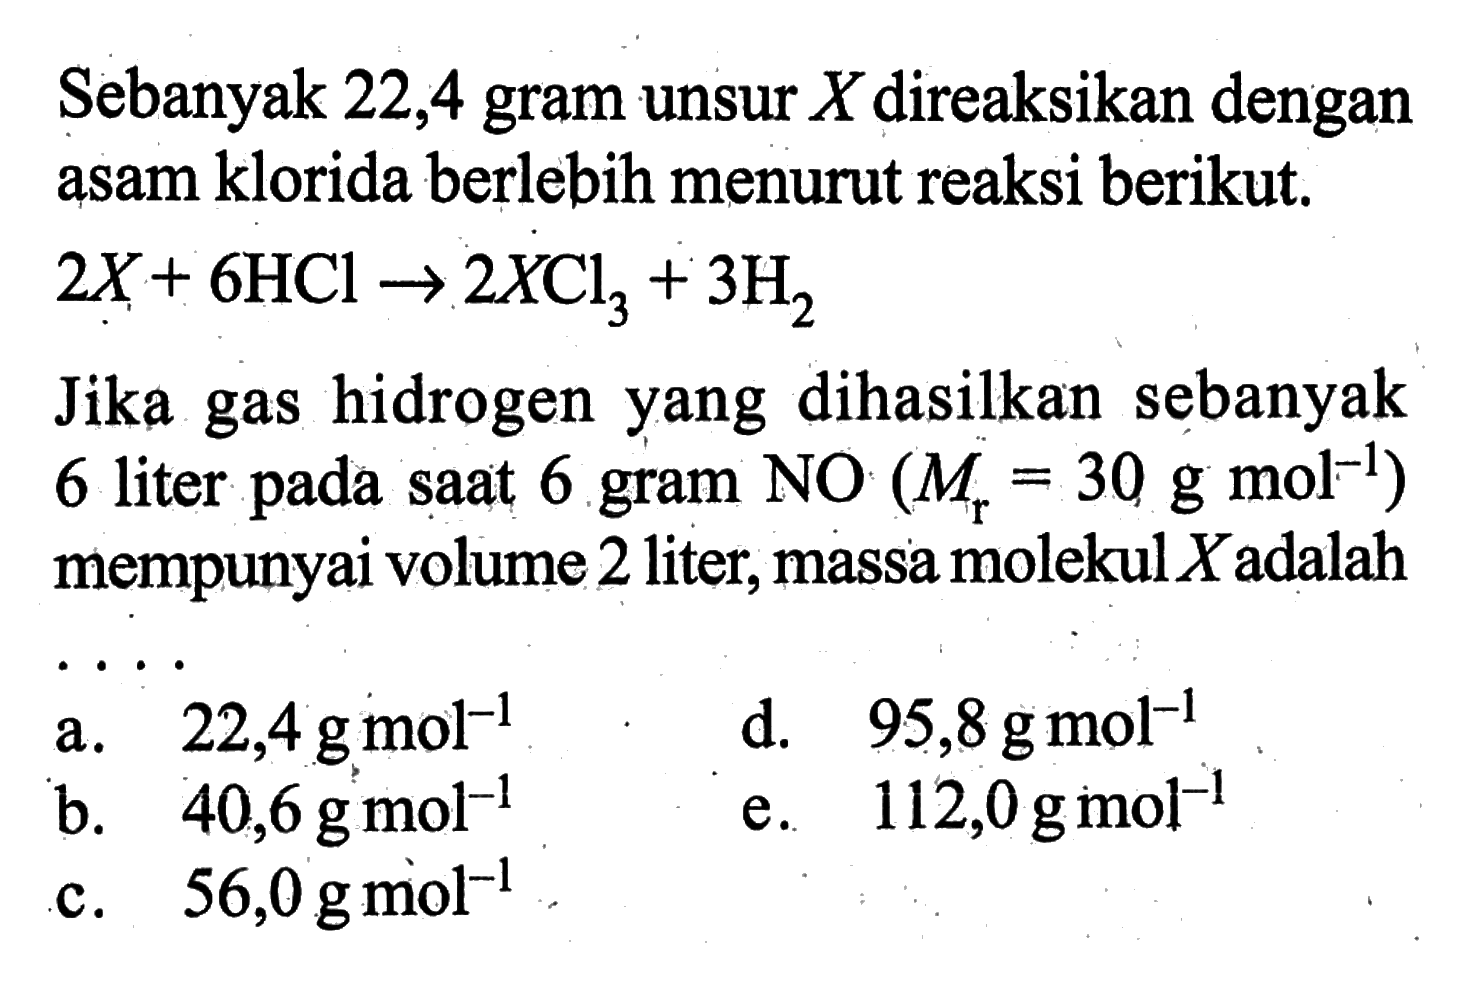 Sebanyak 22,4 gram unsur X direaksikan dengan asam klorida berlebih menurut reaksi berikut. 2X+6HCl -> 2XCl3+3H2 Jika gas hidrogen yang dihasilkan sebanyak 6 liter pada saat 6 gram NO(Mr=30 g mol^(-1)) mempunyai volume 2 liter, massa molekul  X  adalah